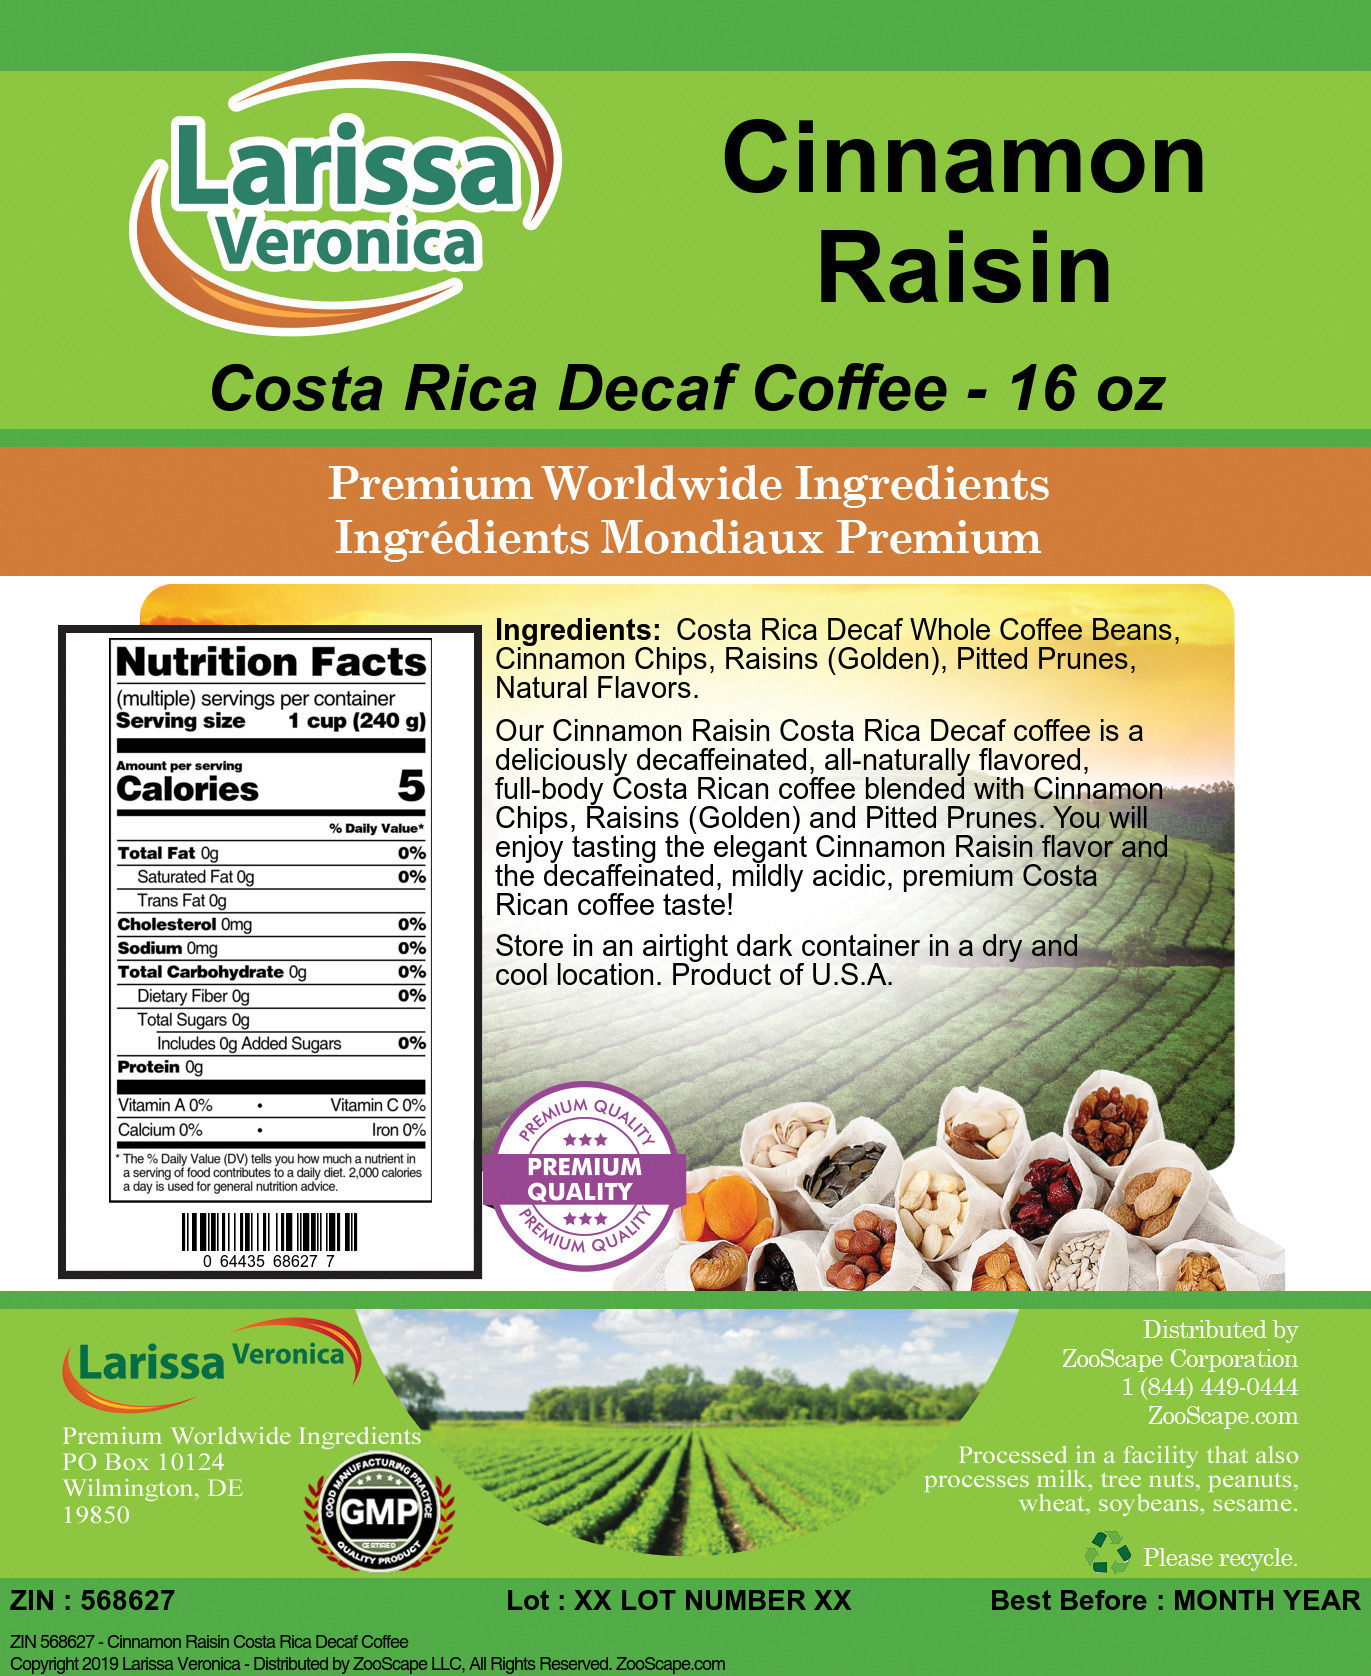 Cinnamon Raisin Costa Rica Decaf Coffee - Label